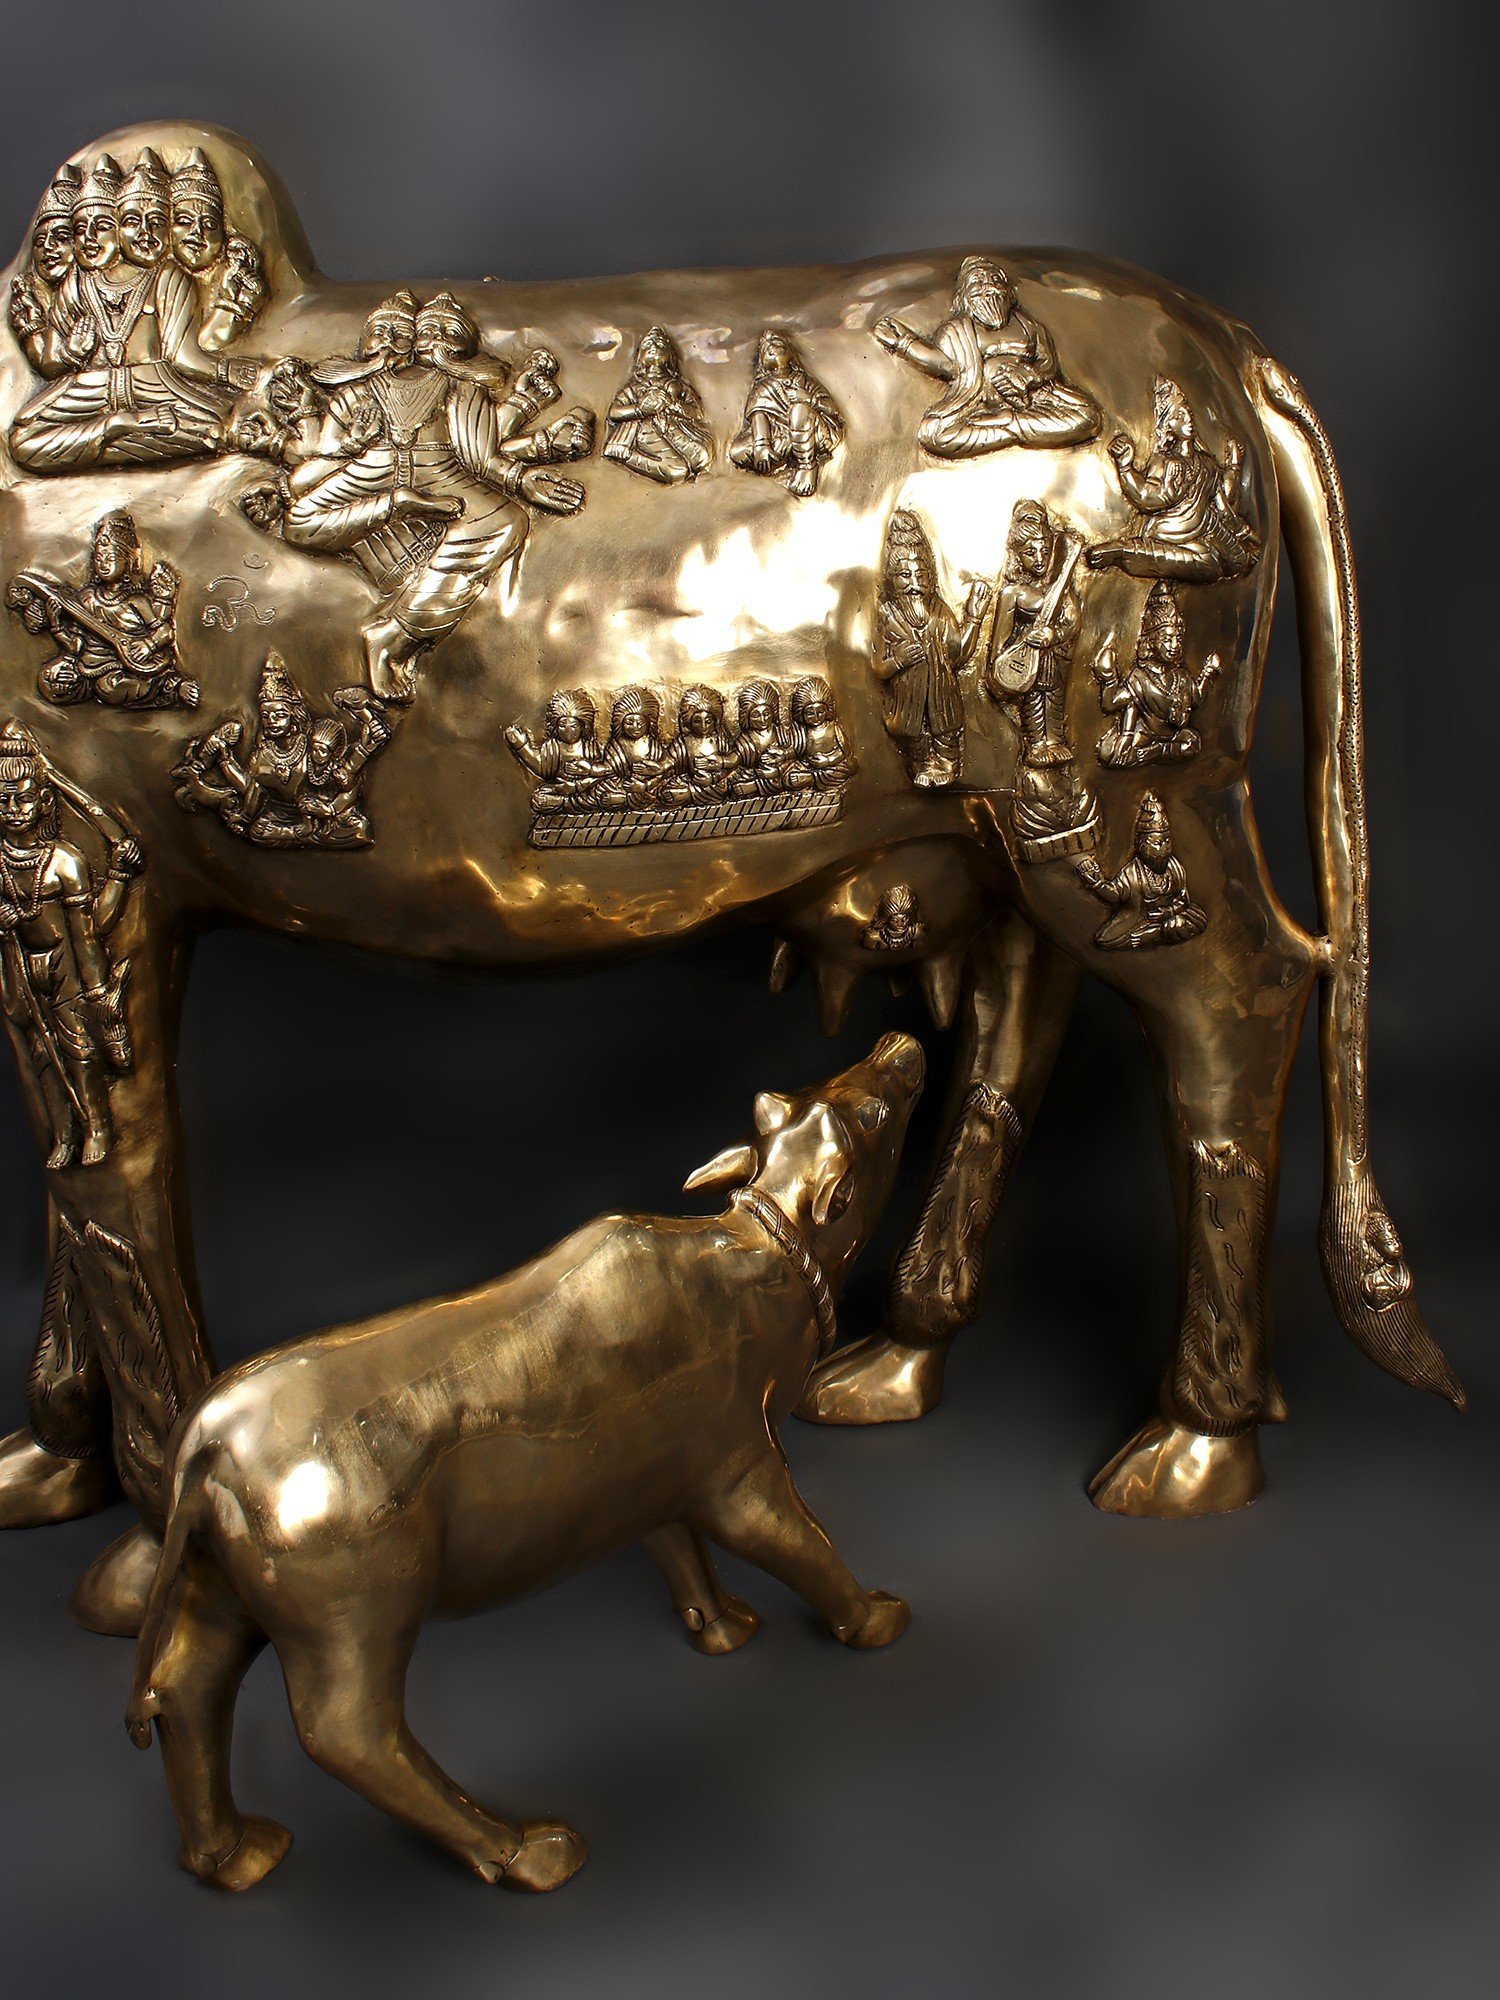 48 Large Kamadhenu Cow with Calf, Brass Statue